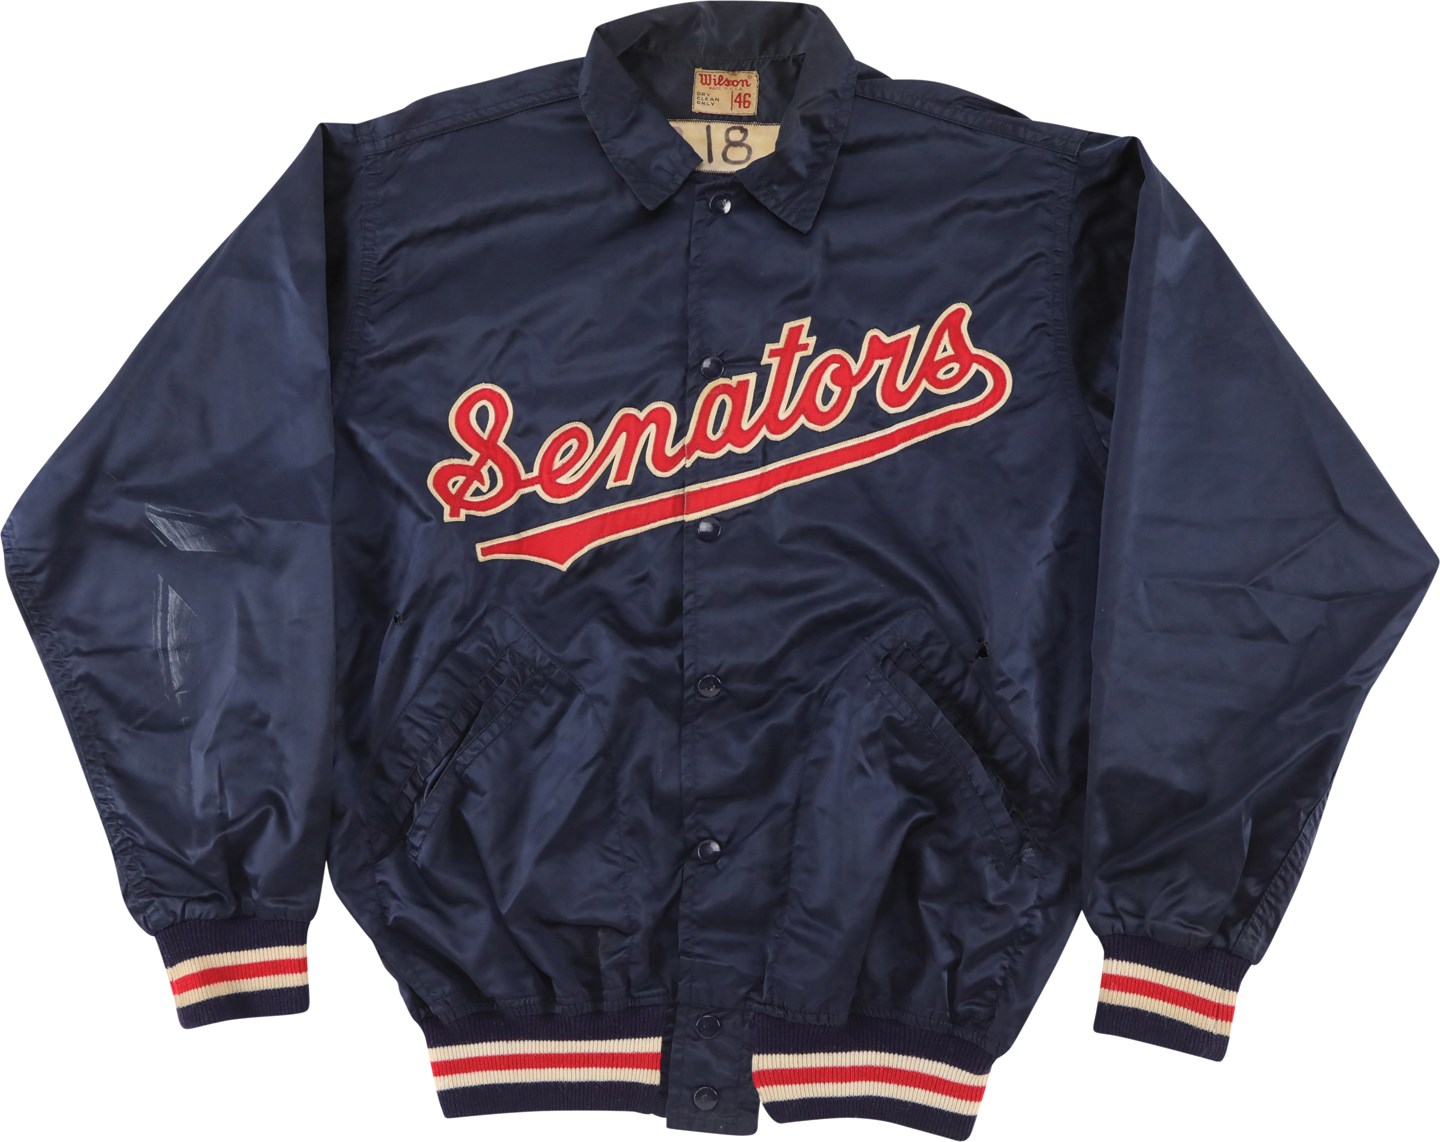 Circa 1970 Washington Senators Game Worn Dugout Jacket